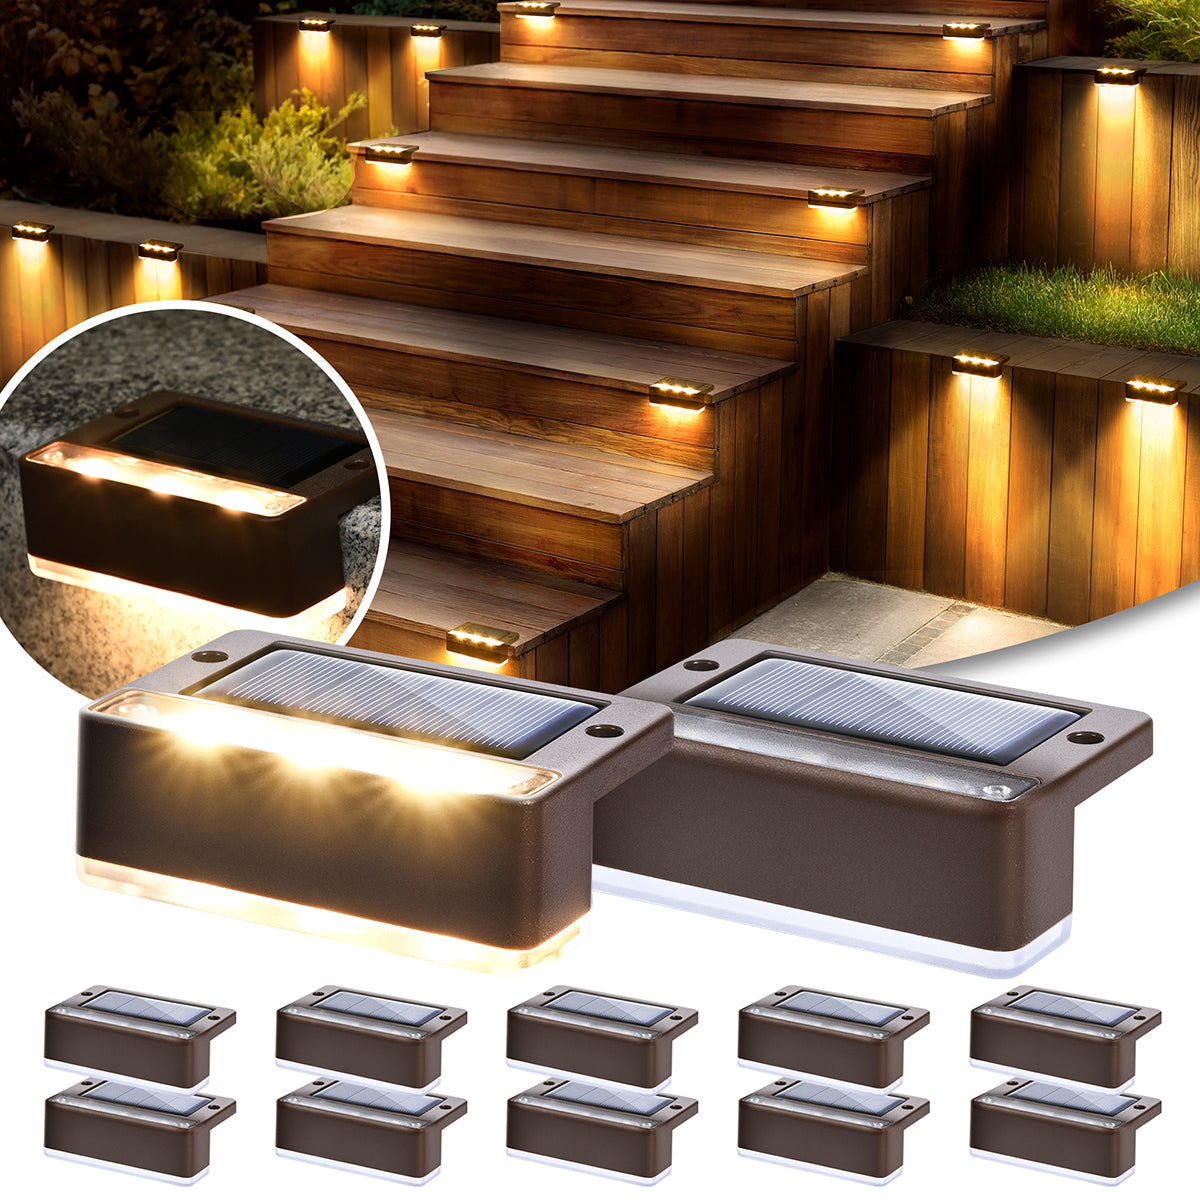 Solpex Horizontal Updated Brown Solar Deck Lights Set